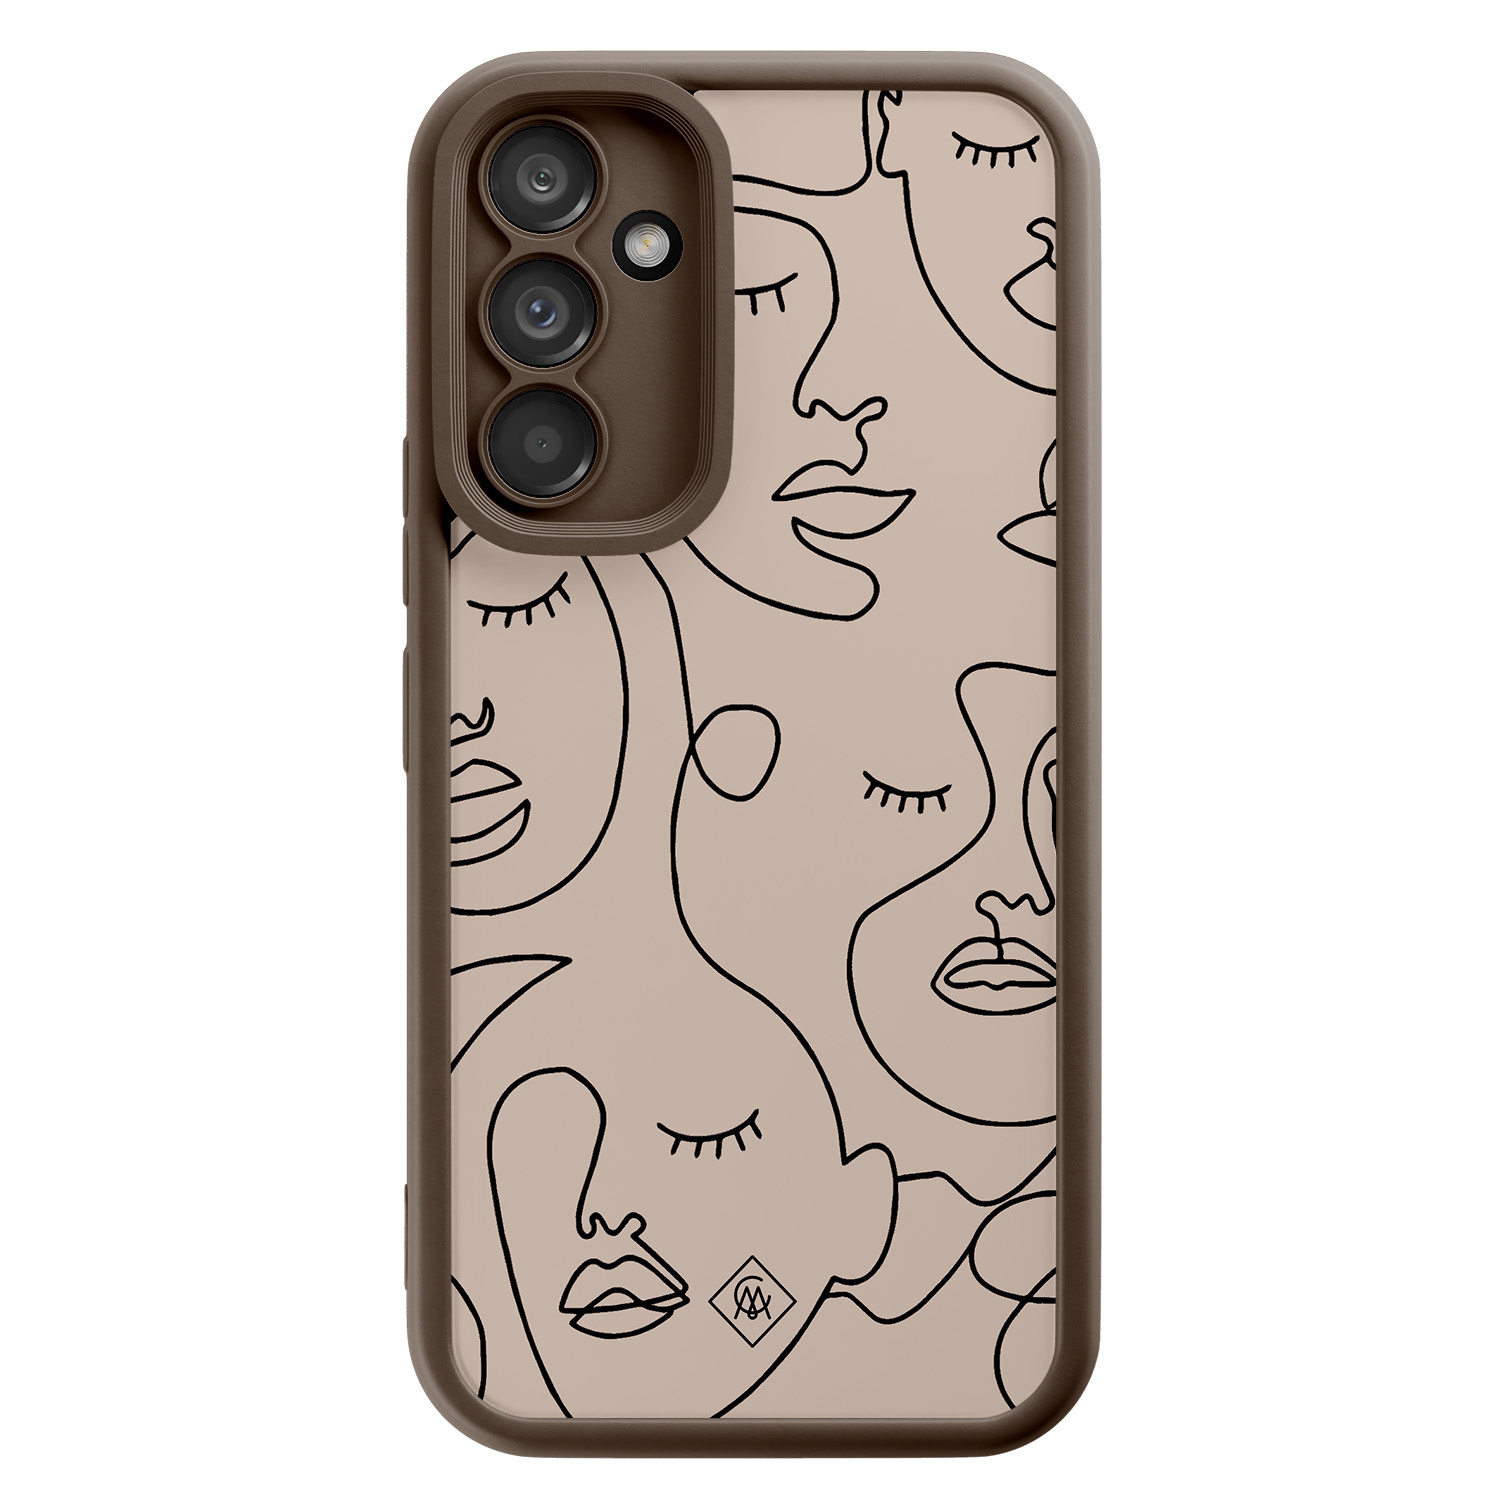 Samsung Galaxy A34 bruine case - Abstract faces - Bruin/beige - Hard Case TPU Zwart - Geometrisch patroon - Casimoda